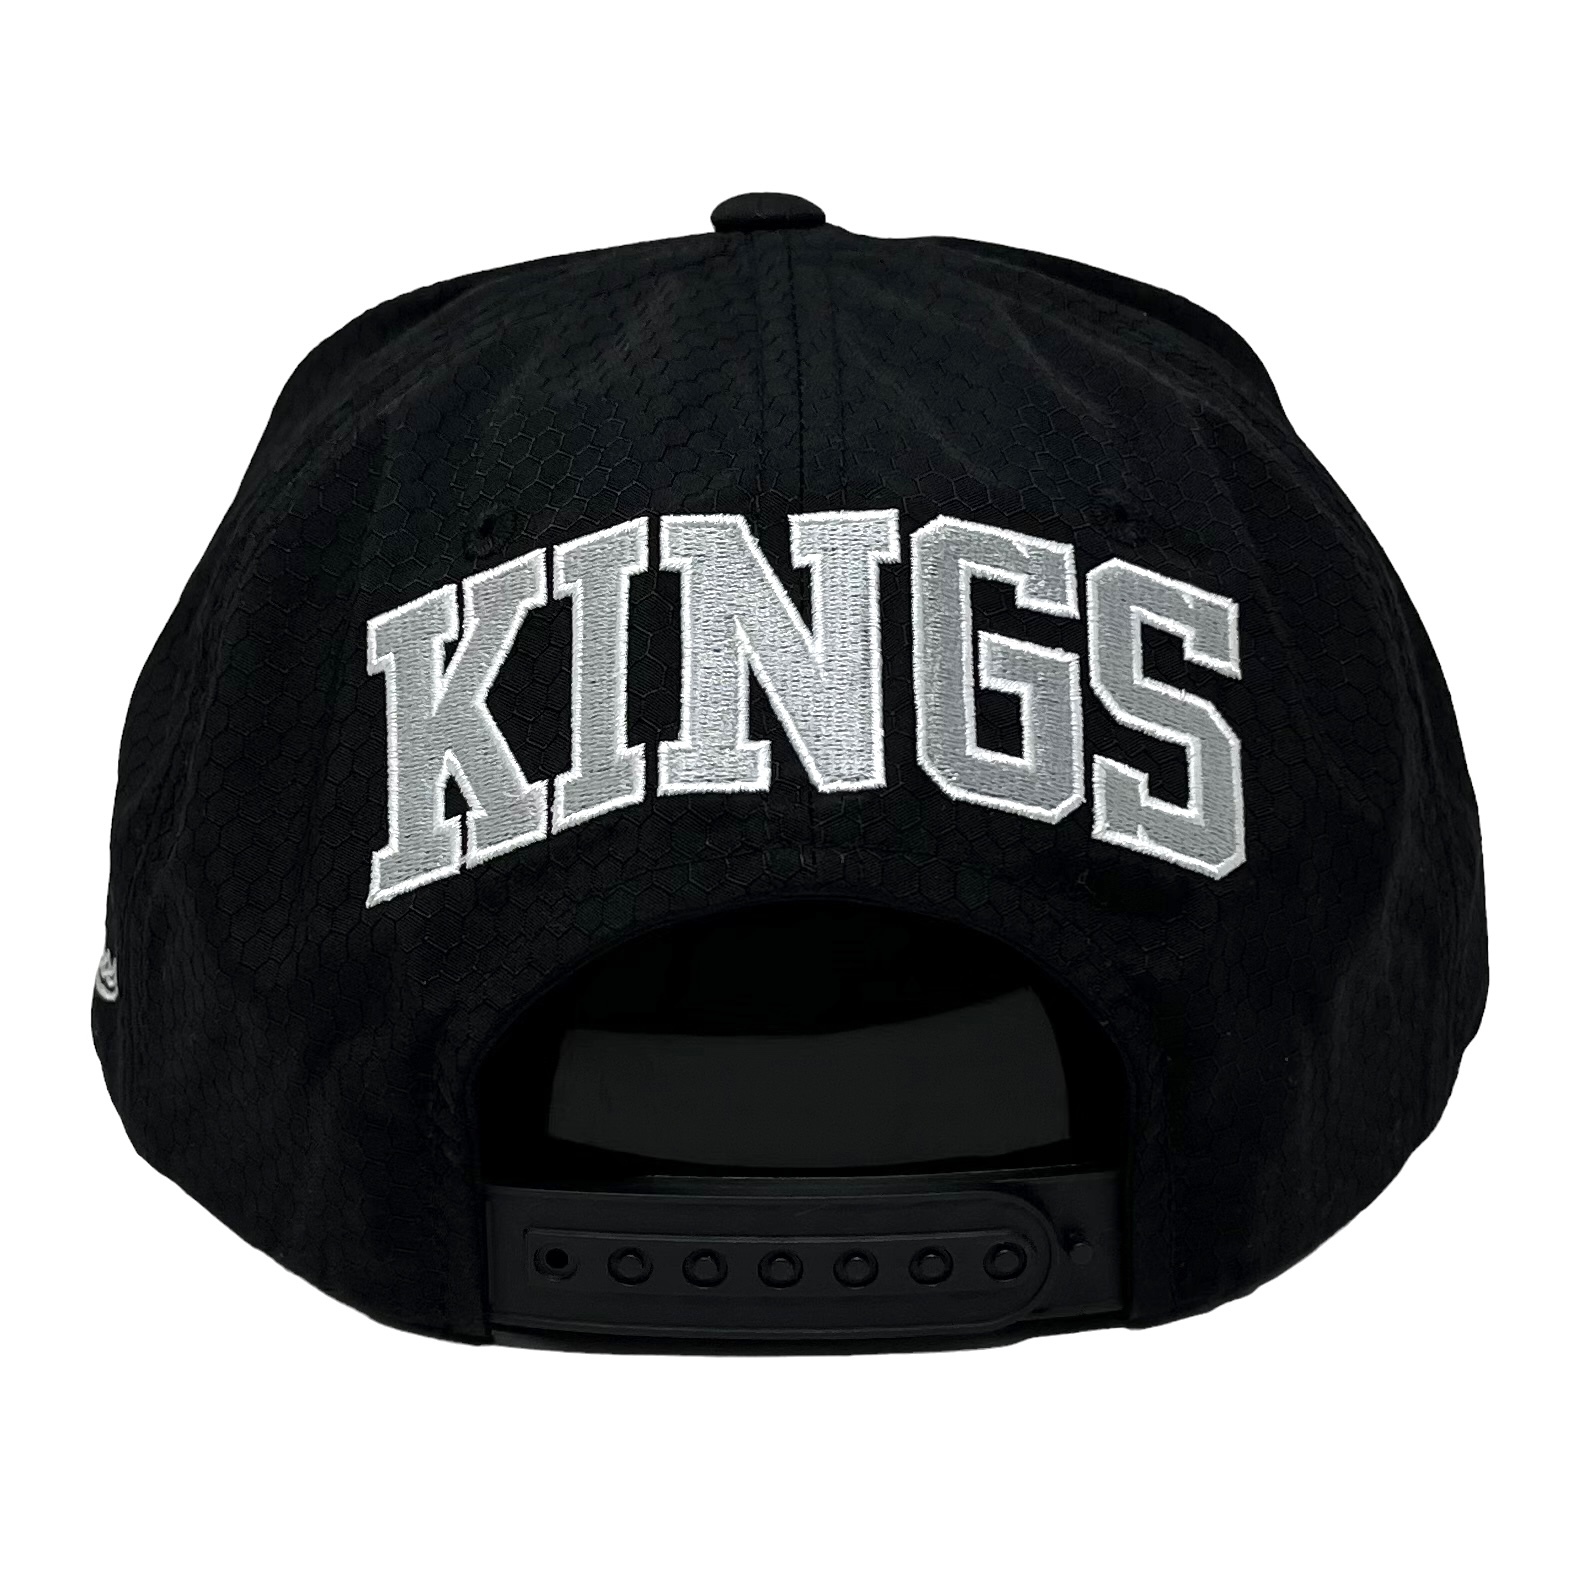 Los Angeles KINGS NHL Intl045 Mitchell & Ness Cap